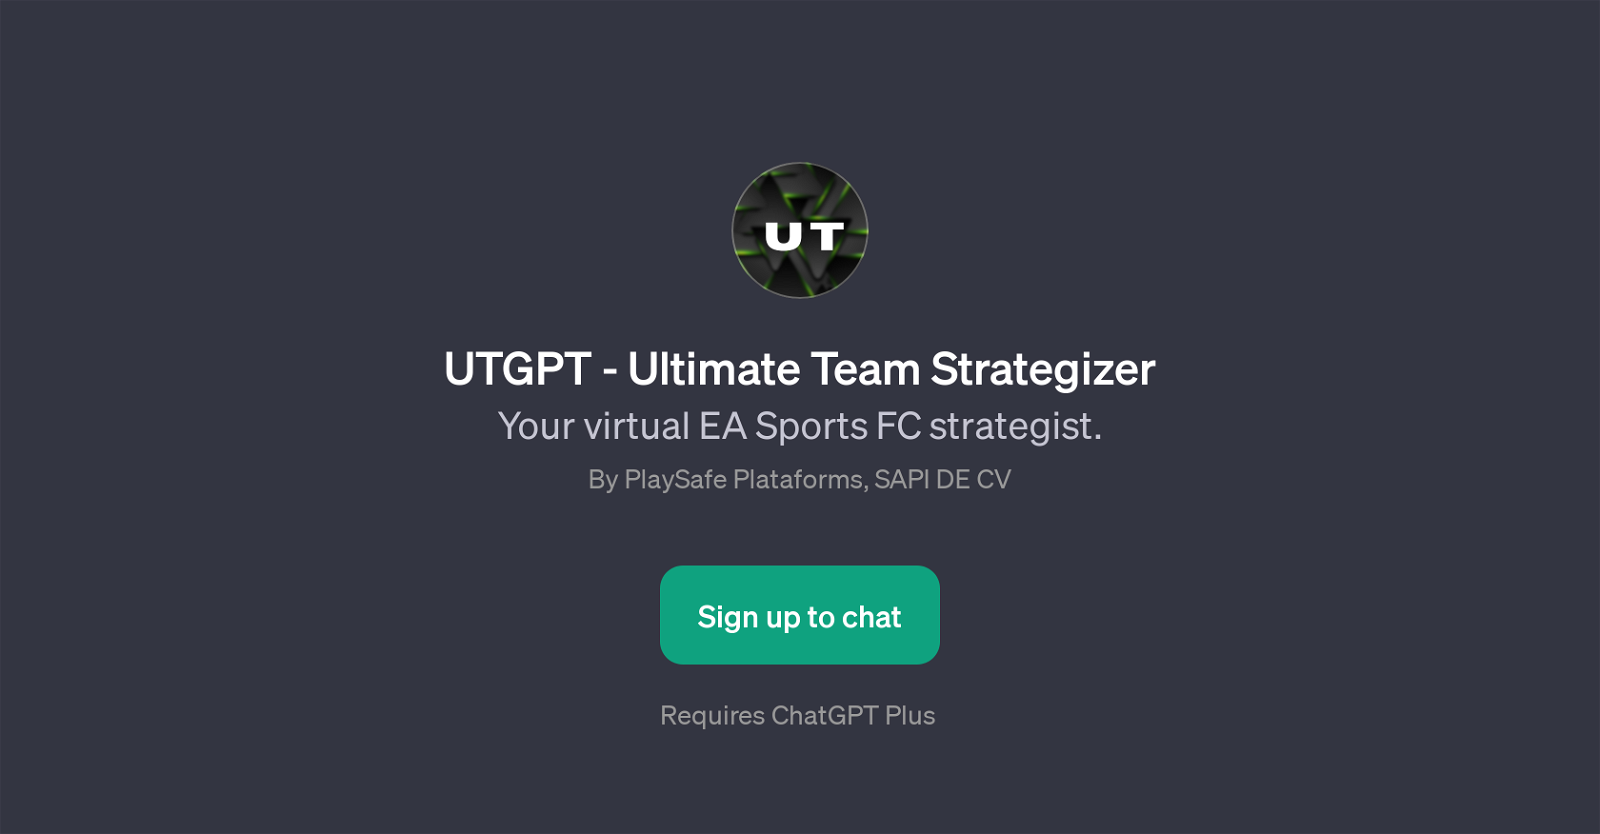 UTGPT - Ultimate Team Strategizer website